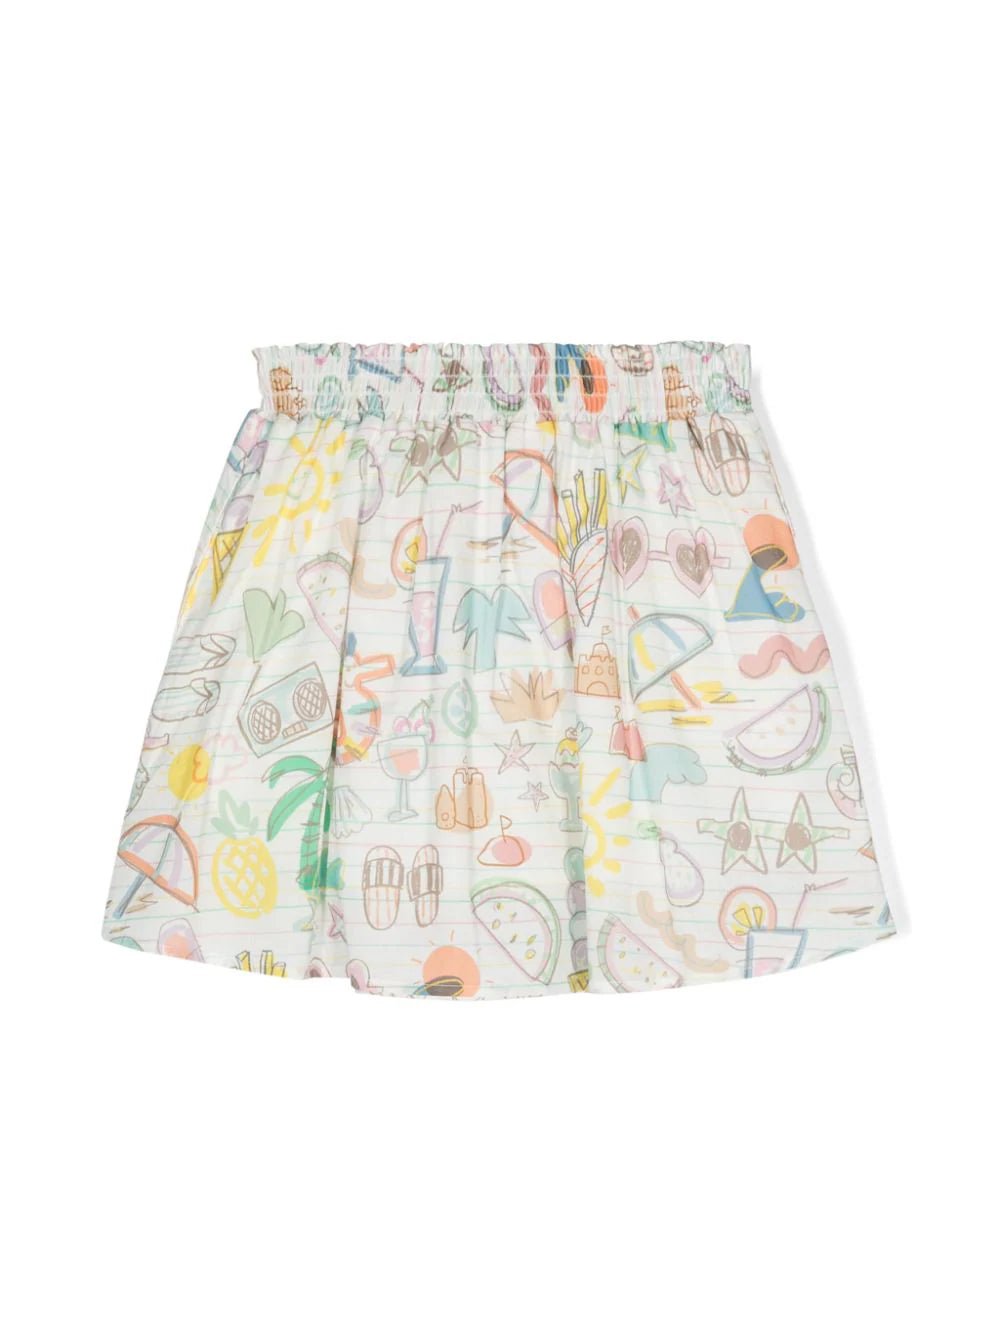 Holiday Skirt - Multi - Posh New York